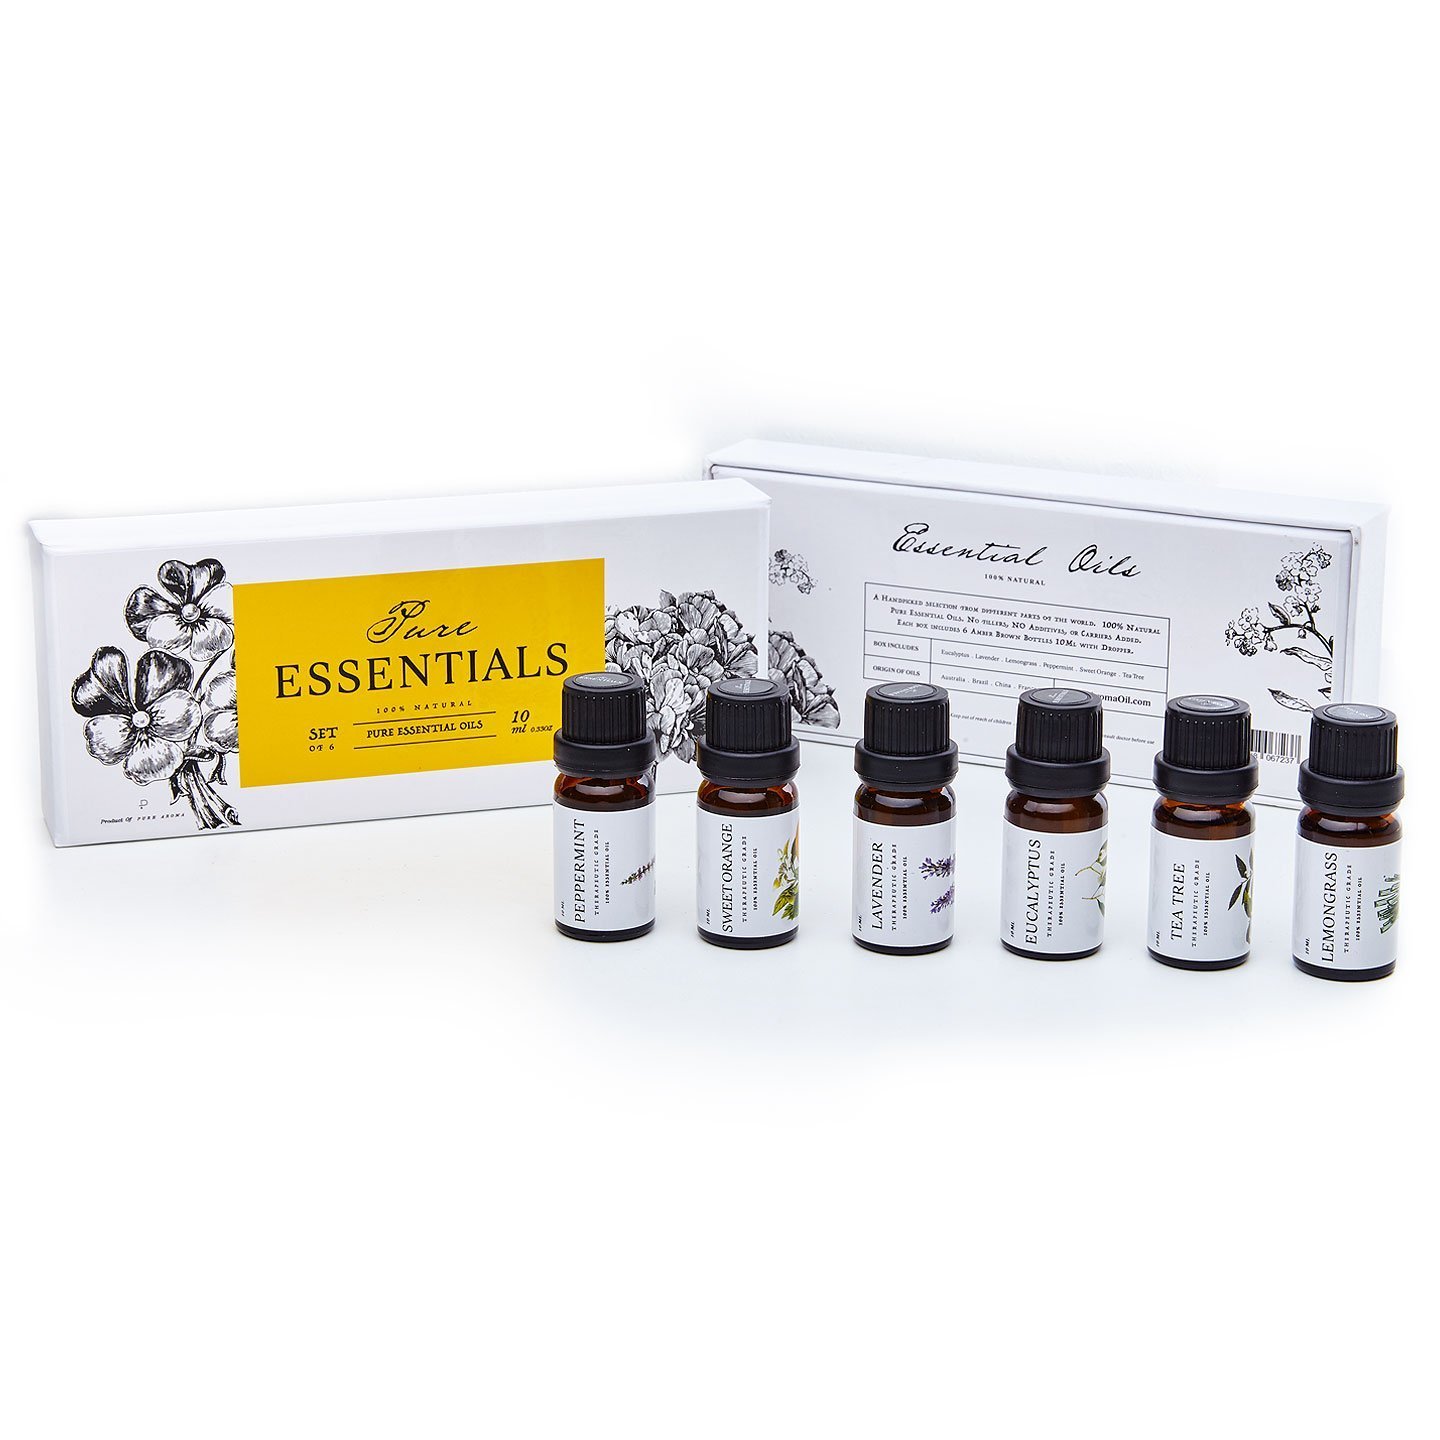 Essential Oils by Pure Essentials 100% Pure Oils kit- Top 6 Aromatherapy Oils Gift Set-6 Pack, 10ML(Eucalyptus, Lavender, Lemon Grass, Orange, Peppermint, Tea Tree)